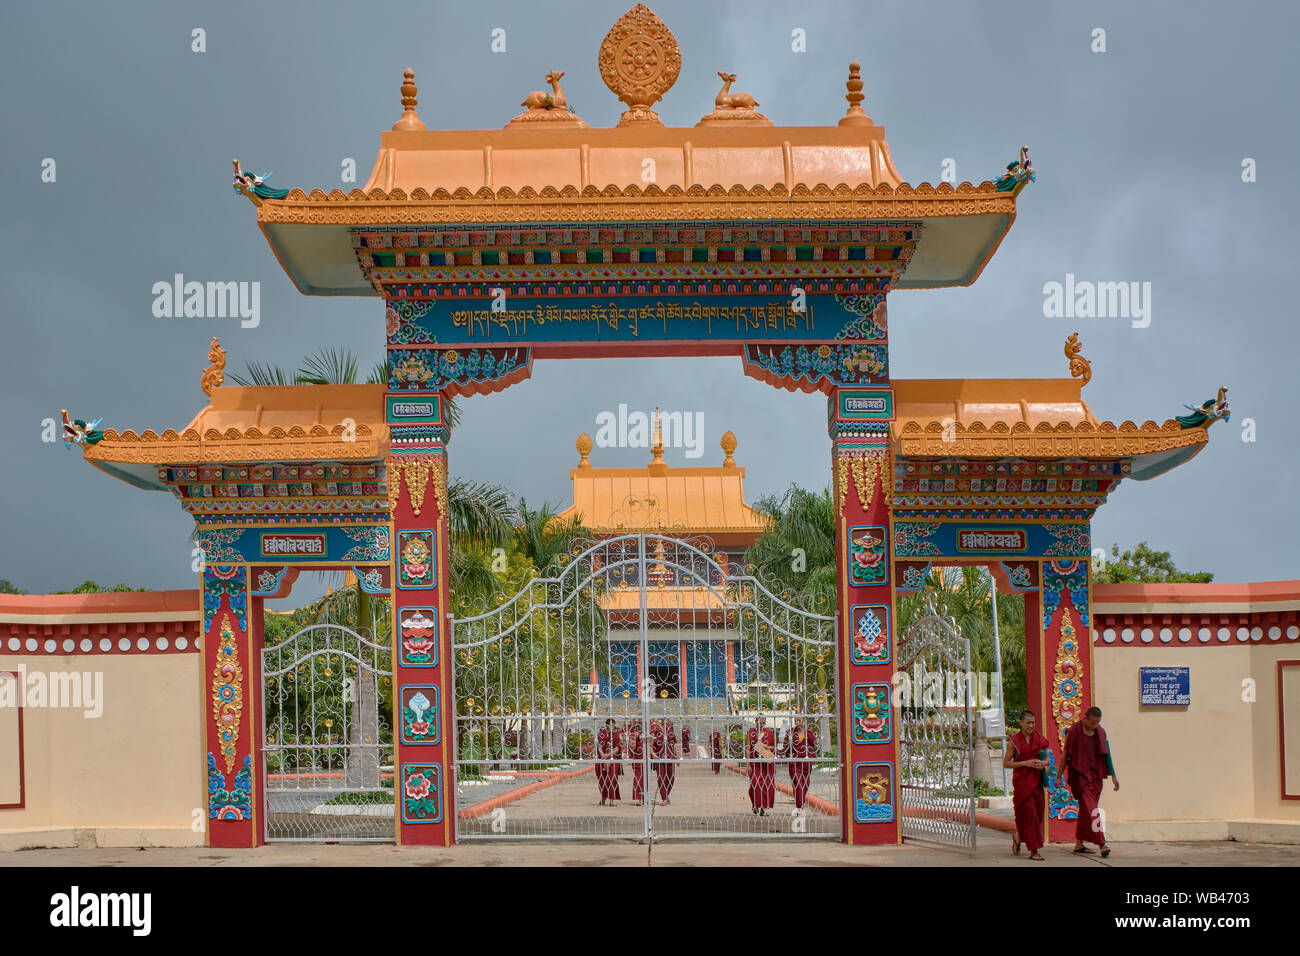 12-june-2013 Entrance of Shar Gaden Monastery at Mundgod panchayat town in Uttara Kannada district Karnataka India Asia Stock Photo